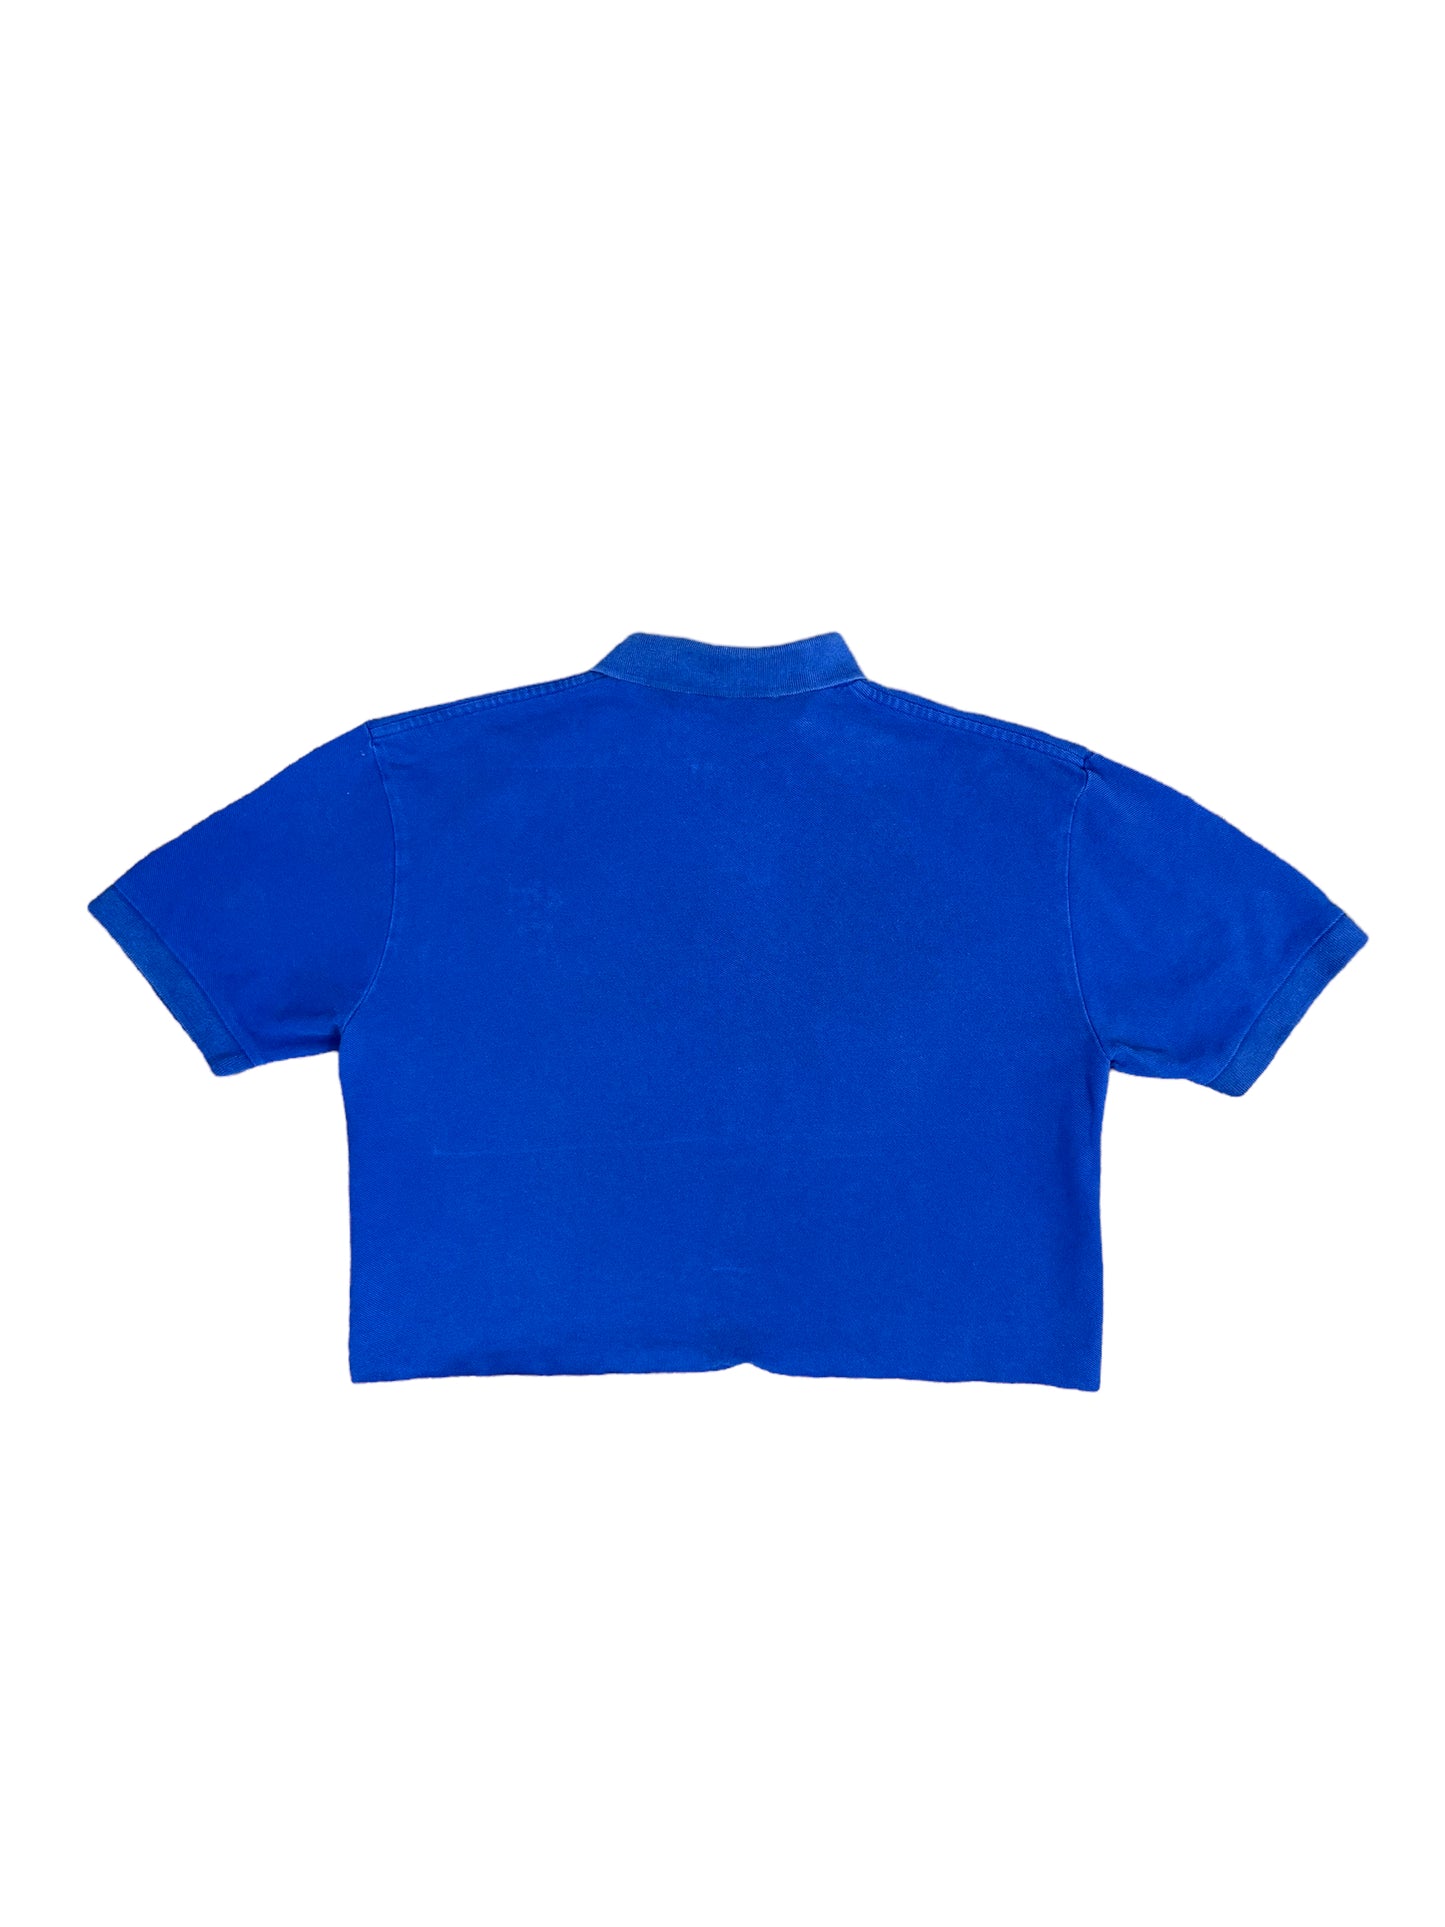 Vintage Ralph Lauren Cropped Polo Shirt - Medium